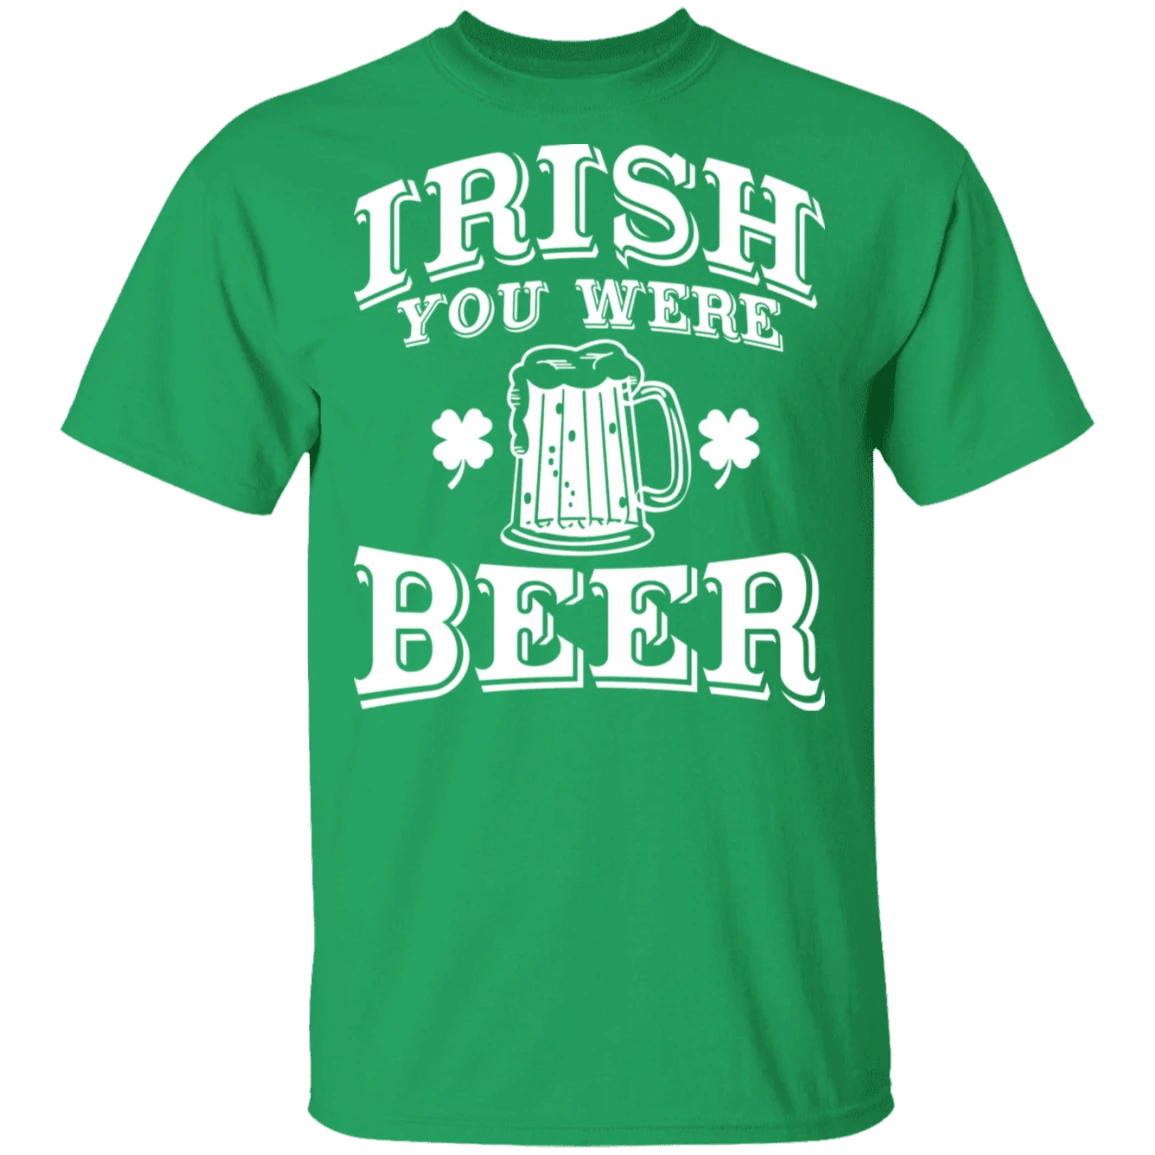 St Patrick's Day Shirt Men Women Irish You Were Beer Funny St Patrick's Day Shirt Saying